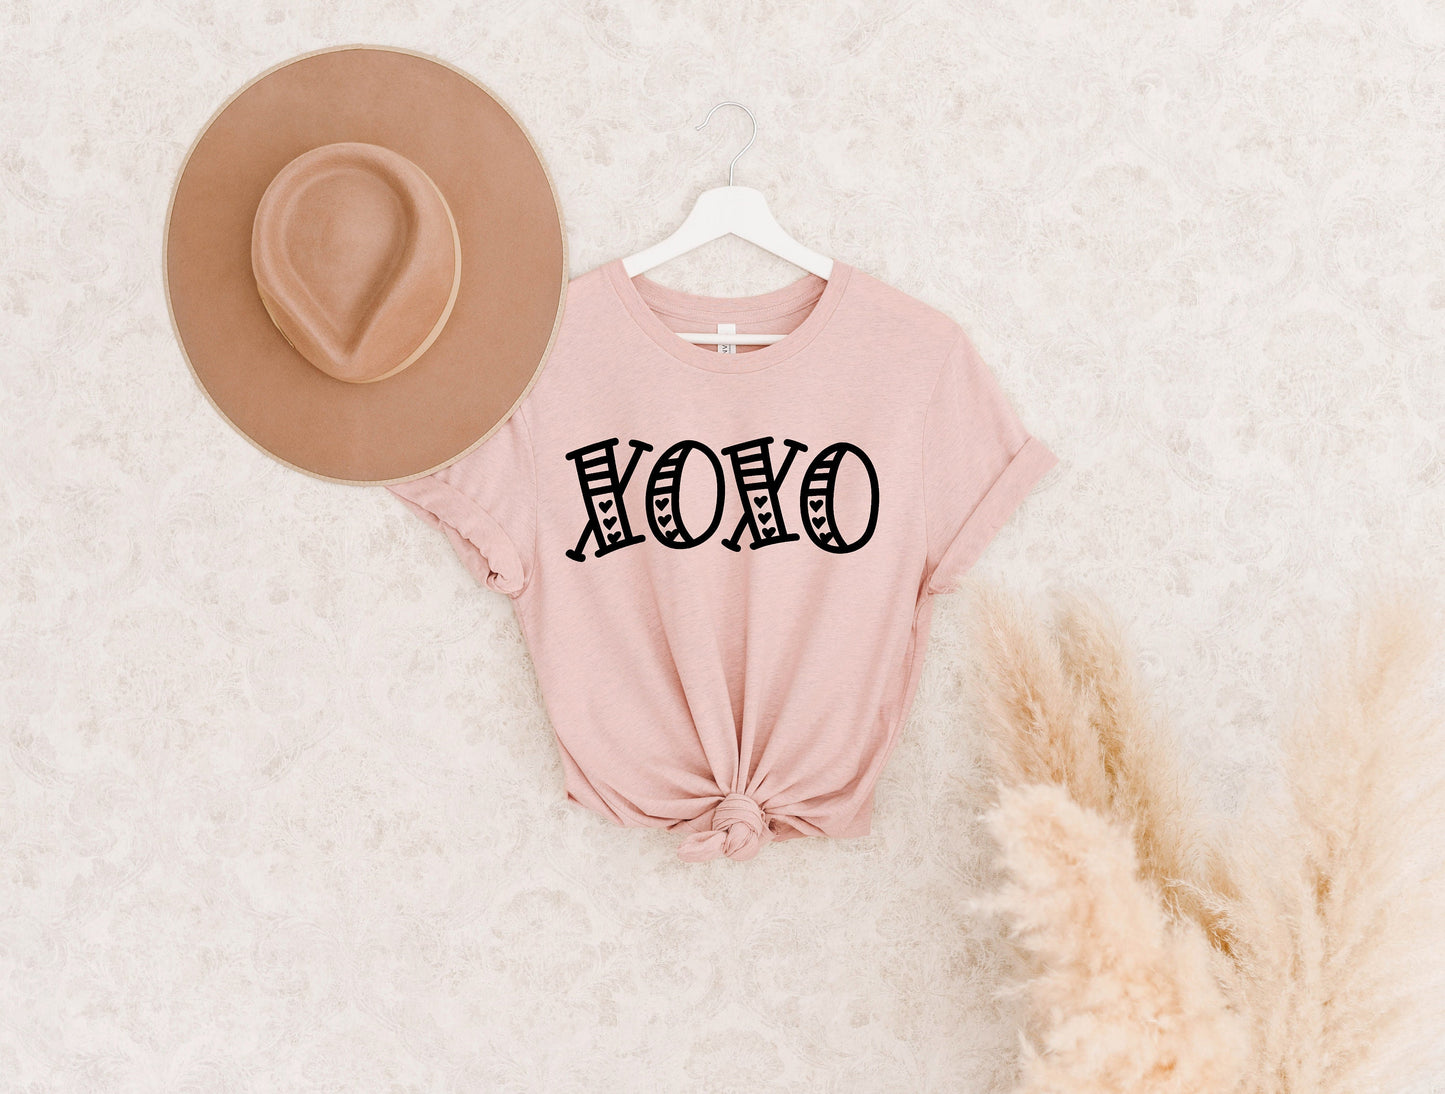 XOXO Shirt - Valentine's Day Shirt for Women - Stick'em Up Baby®